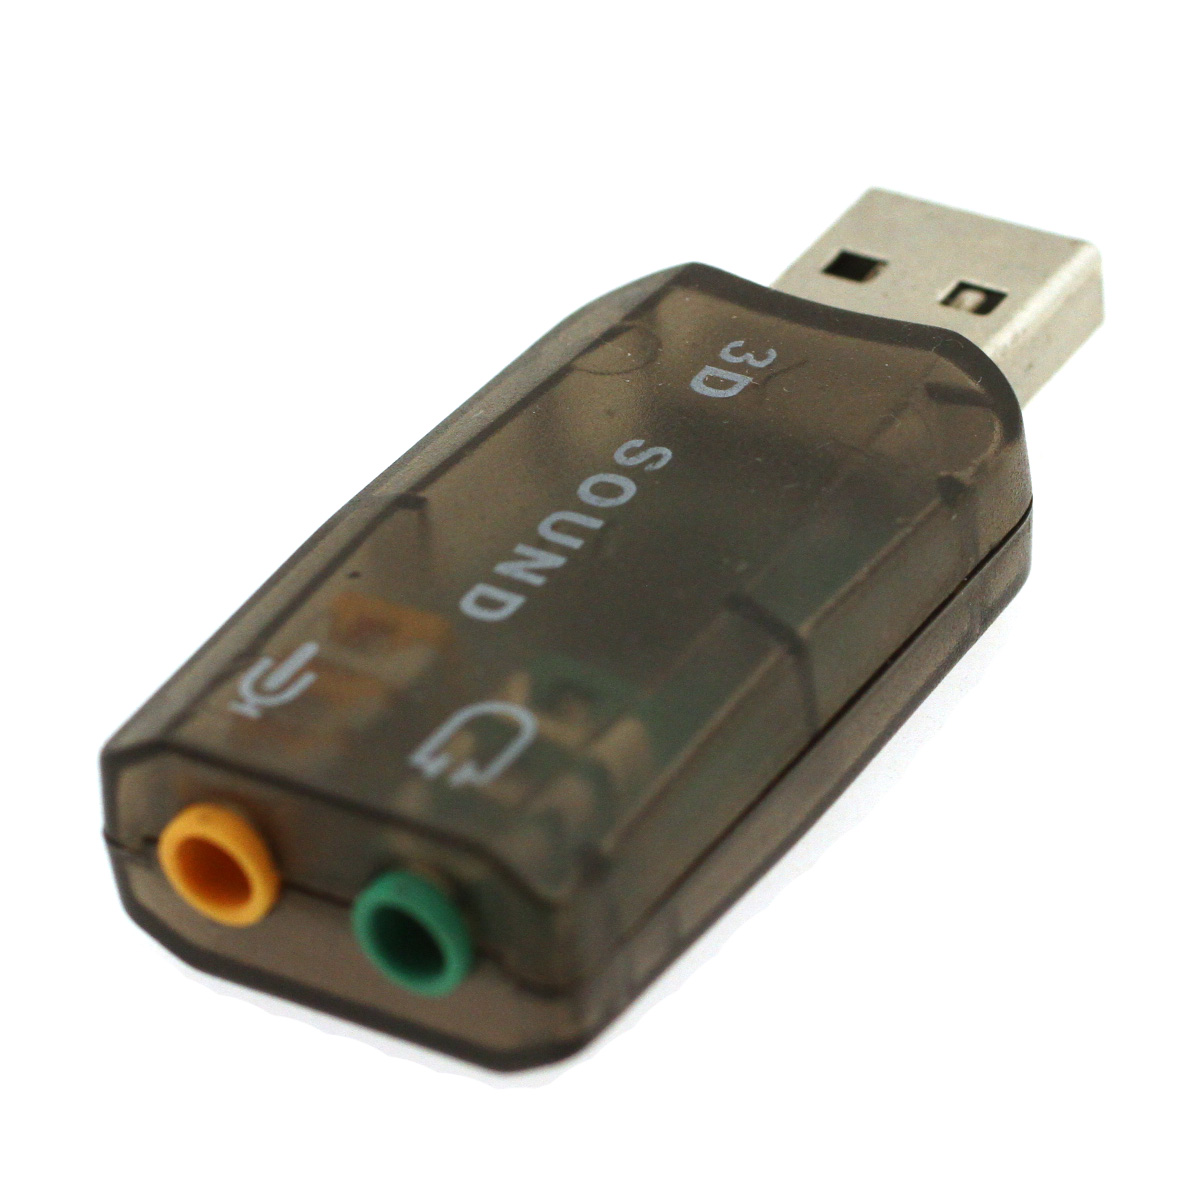 Stereo Audio Output and Microphone Input Via USB | 10-39